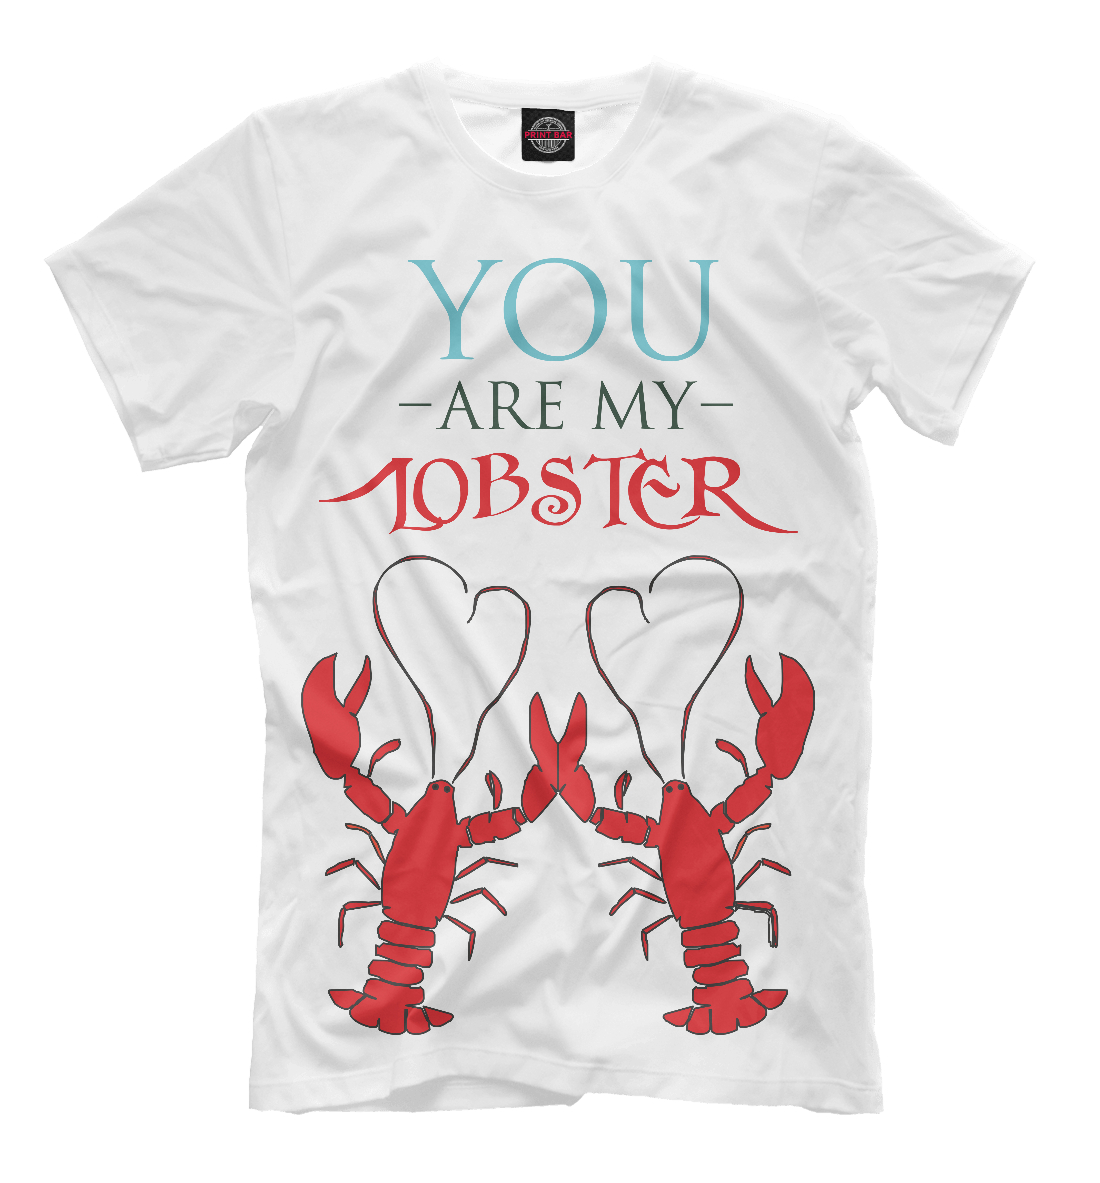 Мужская Футболка с принтом You are my lobster, артикул 14F-969615-fut-2mp